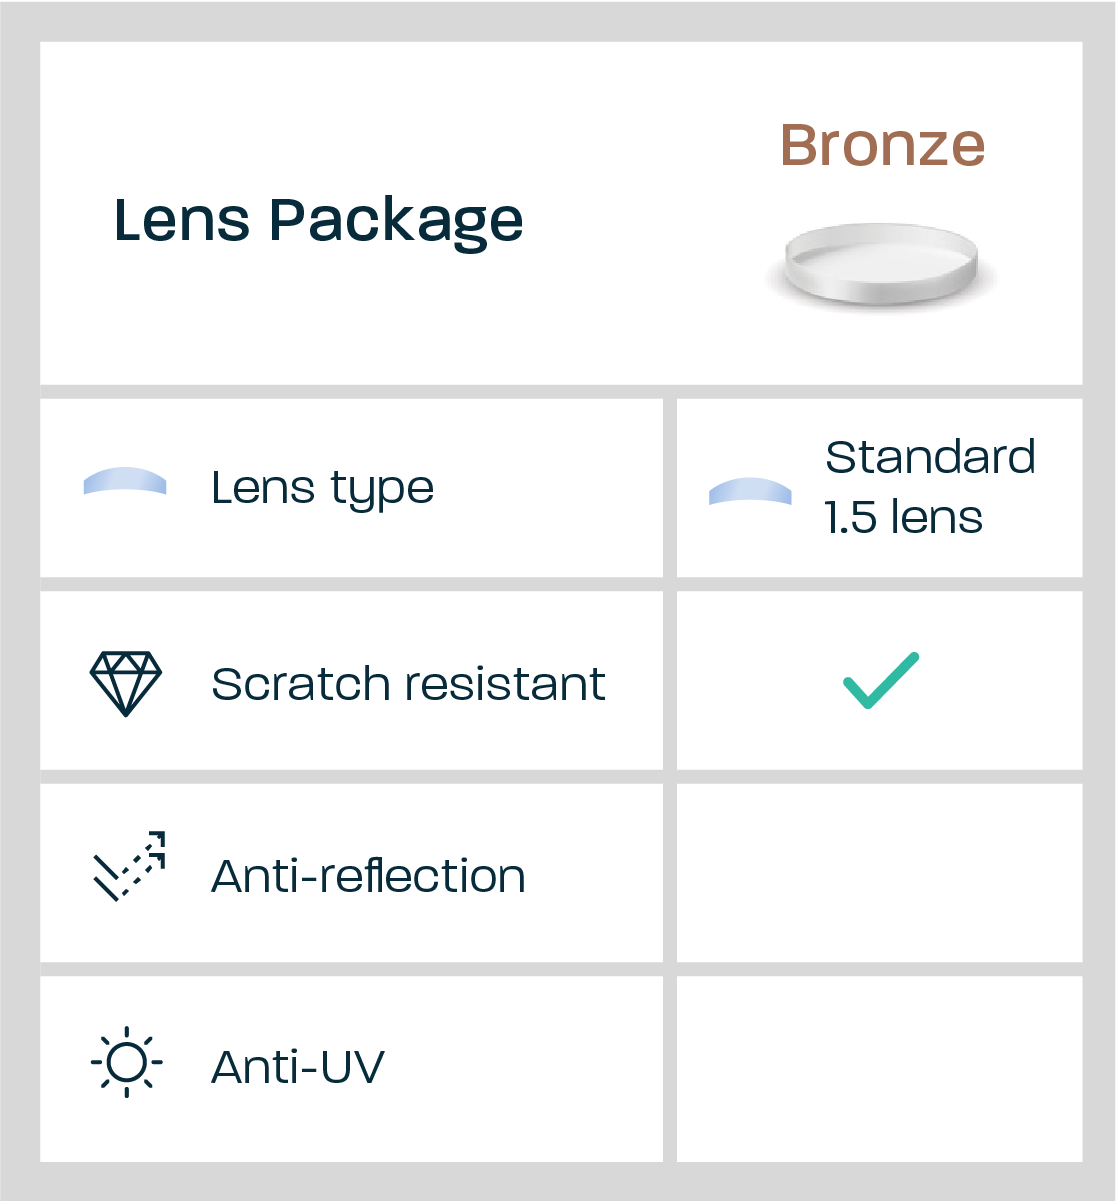 Bronze Package features: standard lenses, scratch-resistant